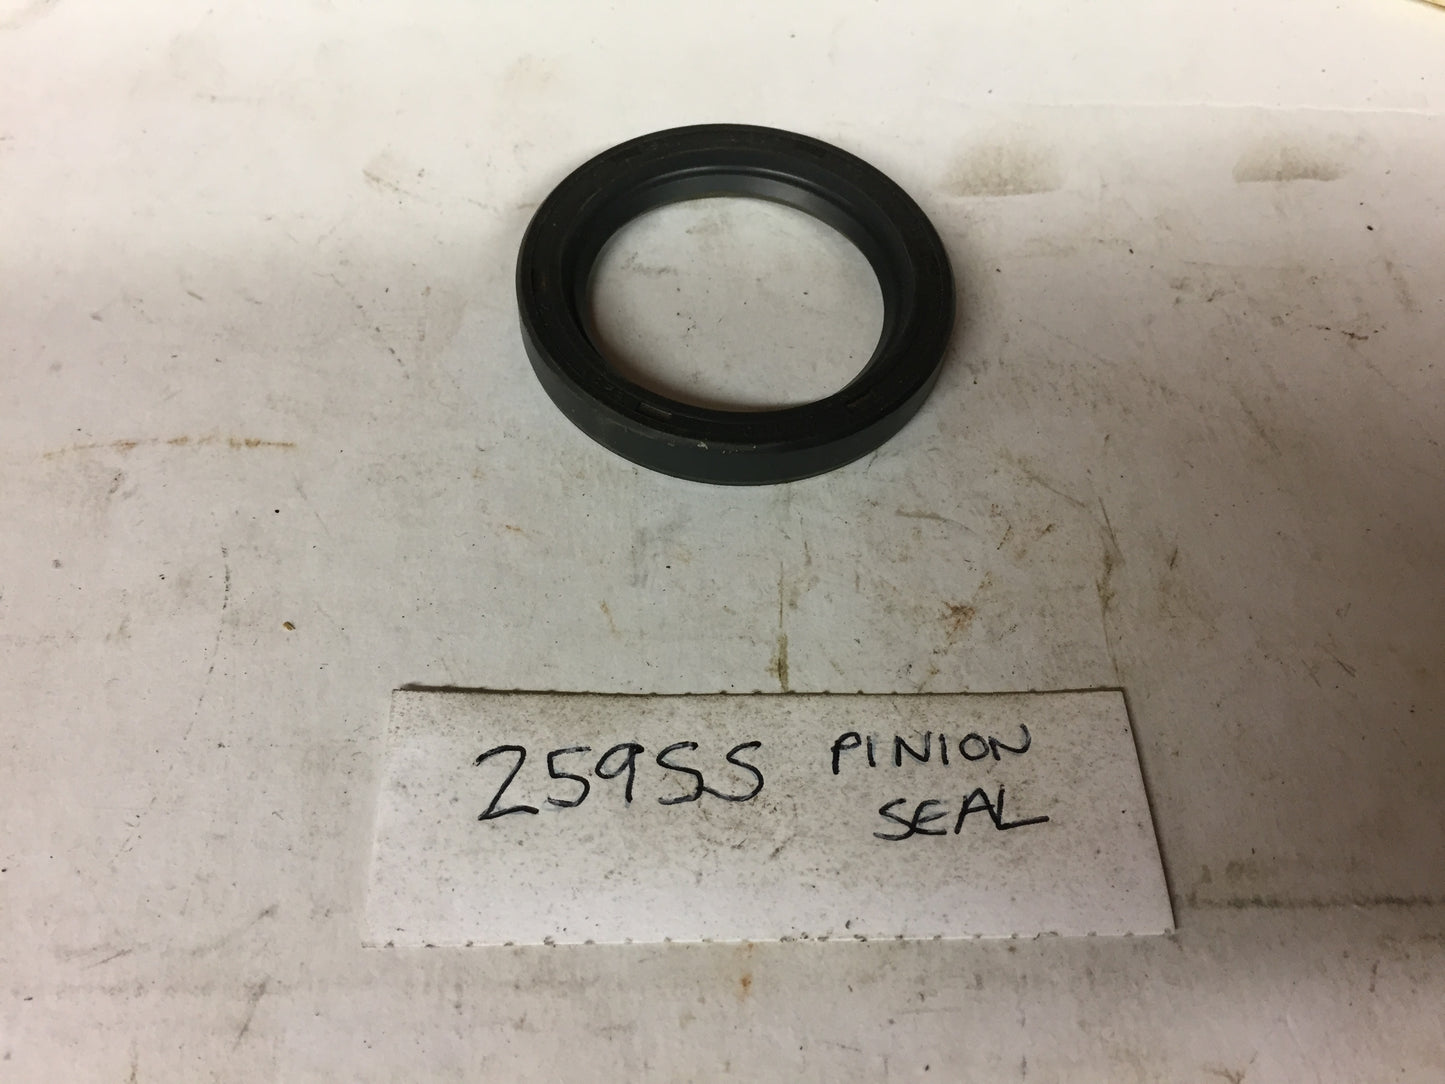 Pinion Seal